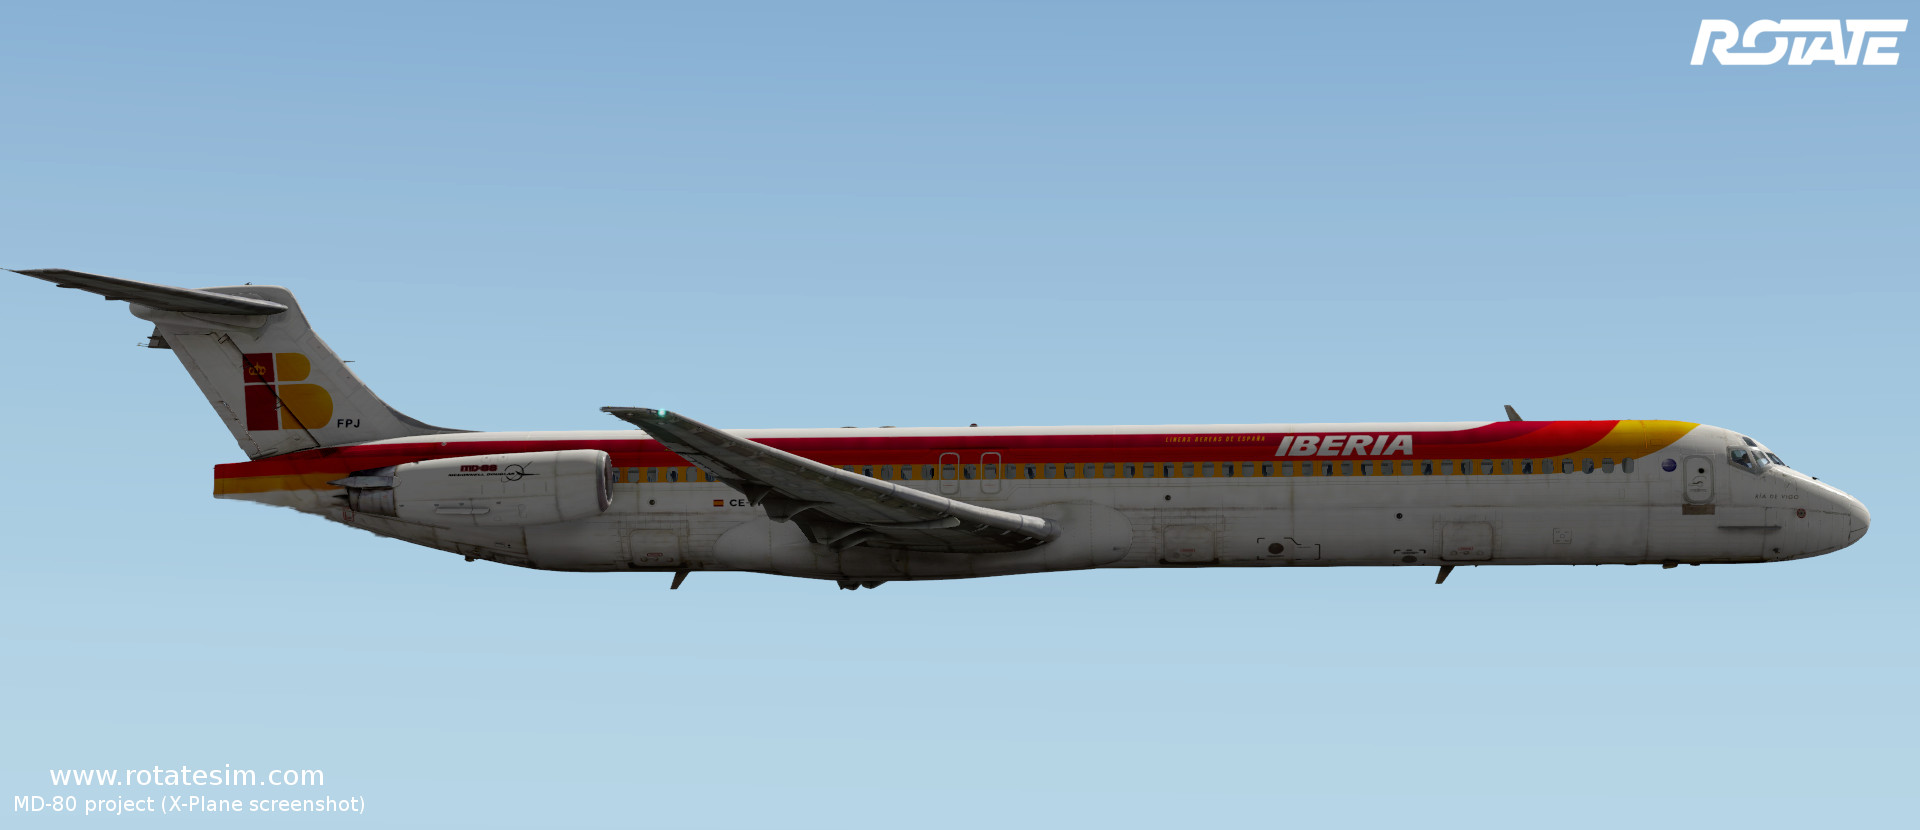 MD-80 liveries - Iberia